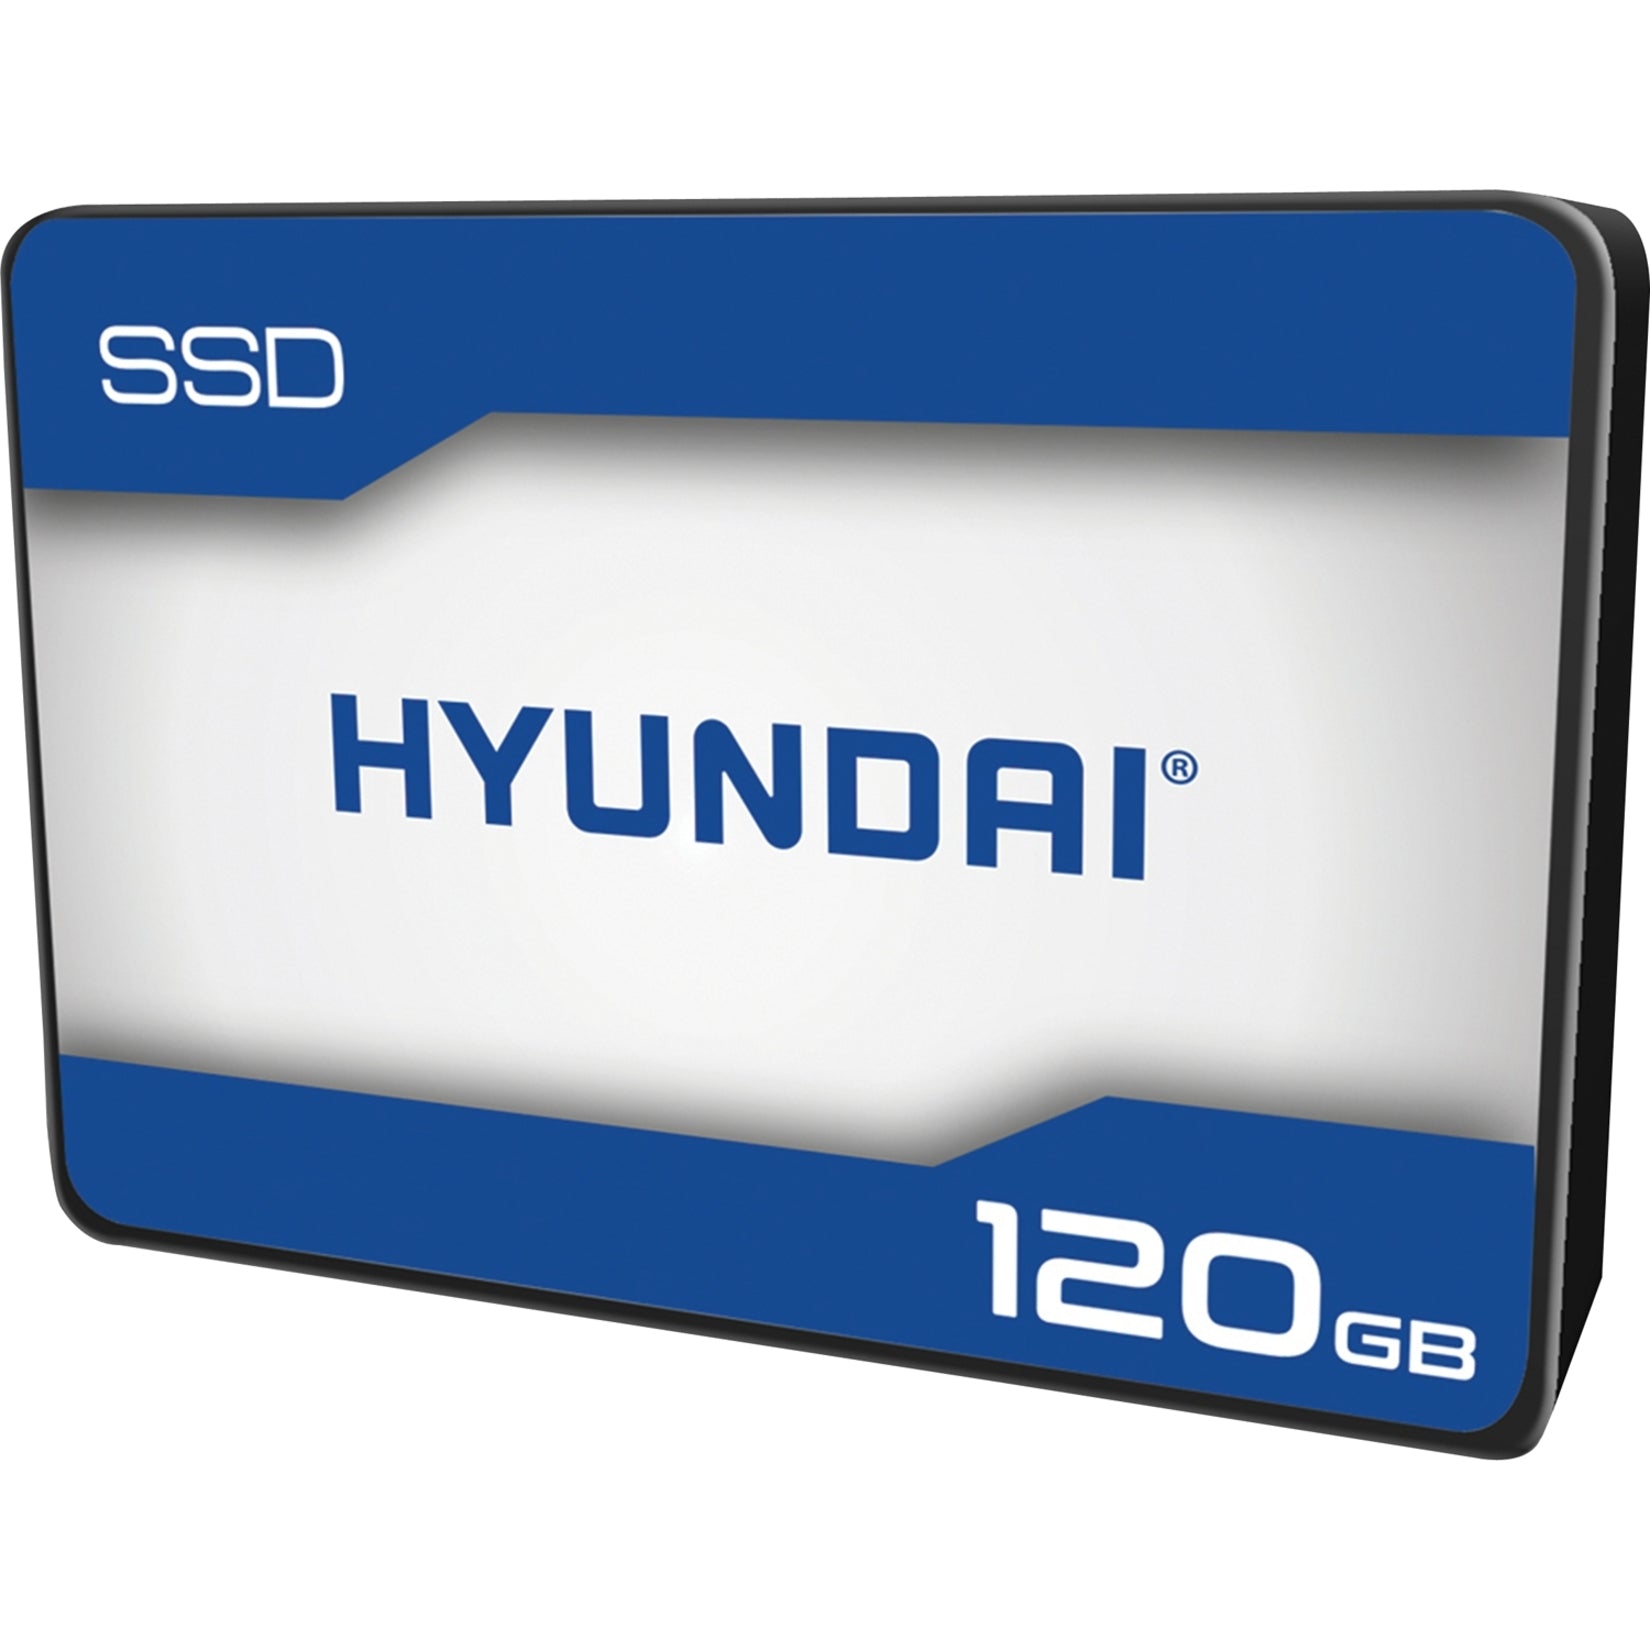 Hyundai C2S3T/120G Solid State Drive, 120GB SATA III TLC, 5 Year Warranty, 550 MB/s Read, 420 MB/s Write